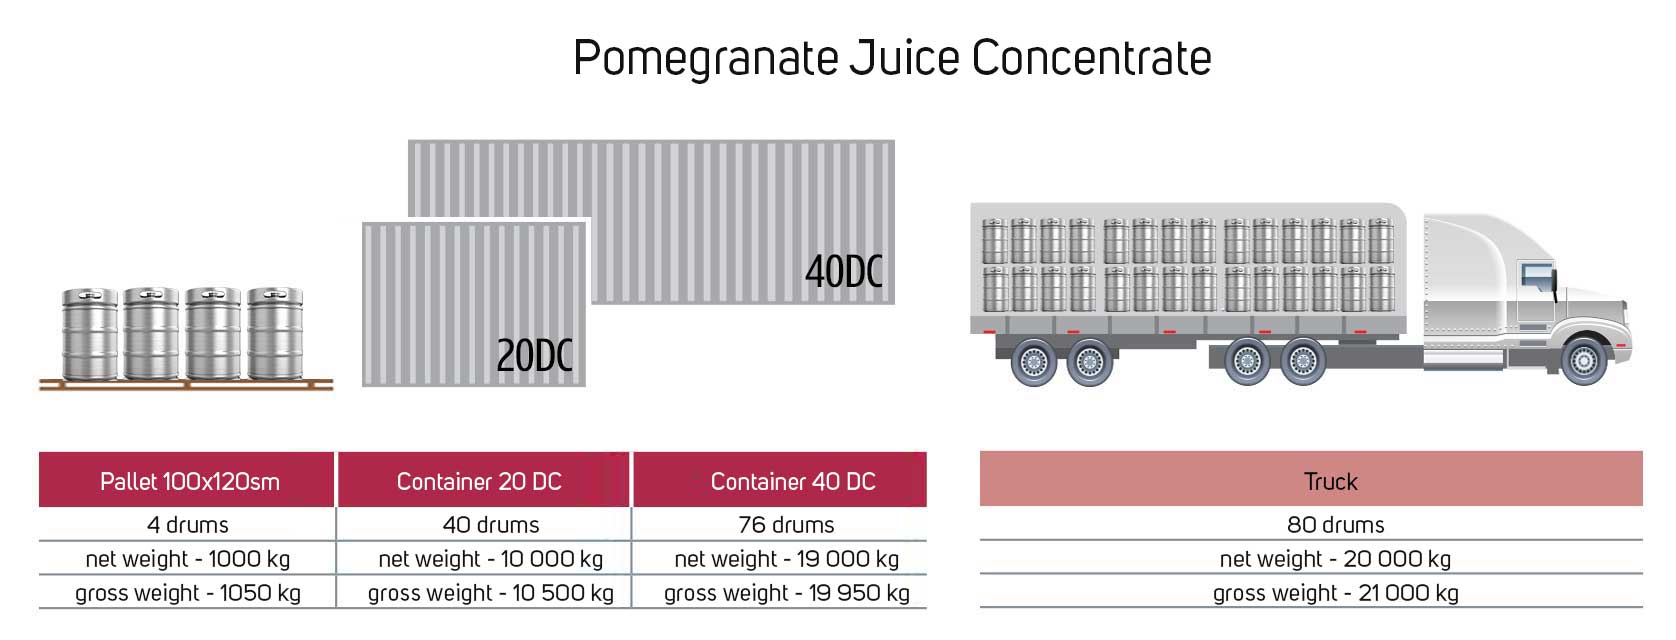 Pomegranate-Juice-Concentrate